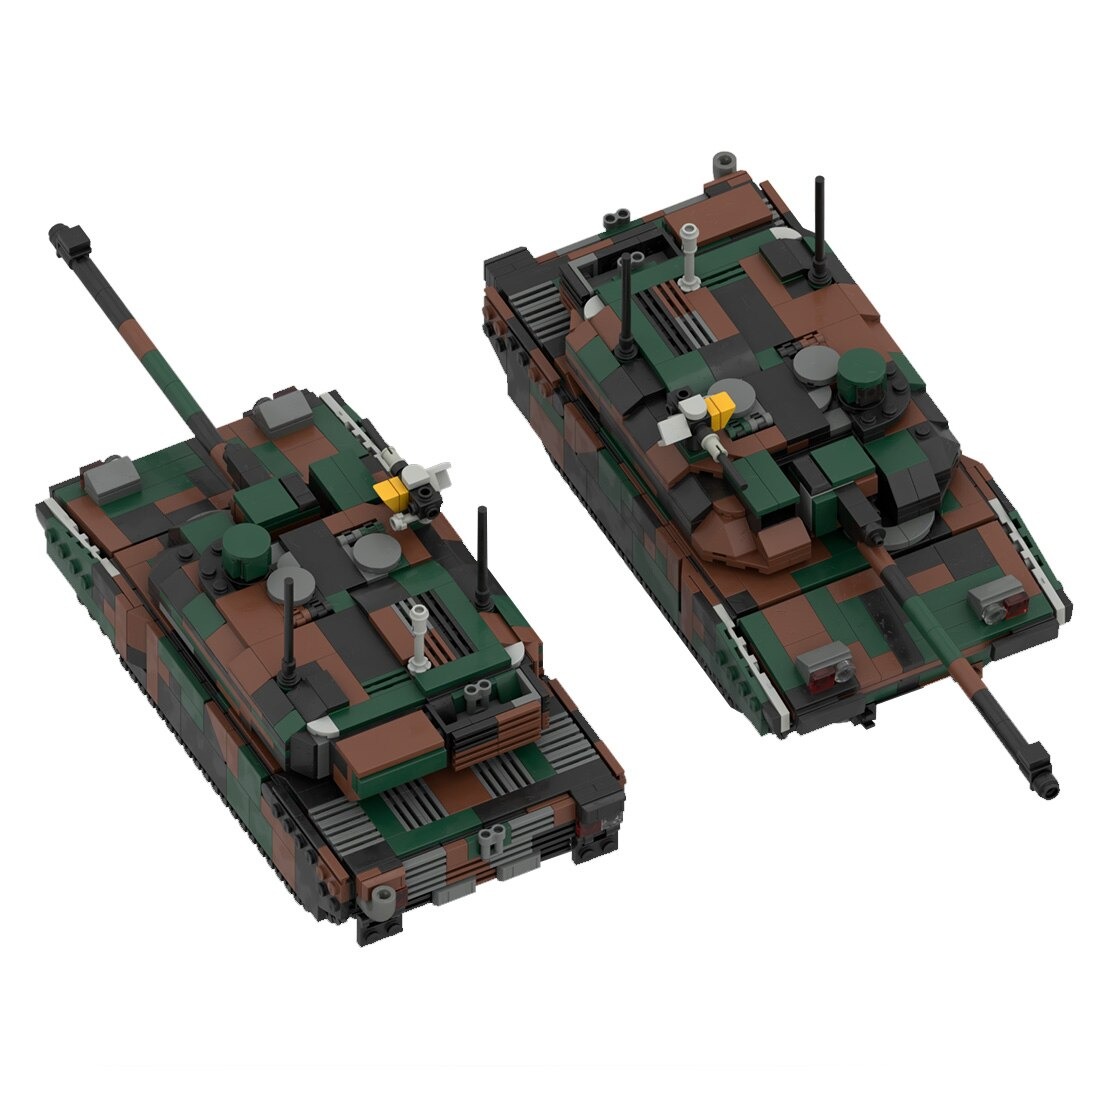 moc 34858 leclerc main battle tank model main 4 - MOULD KING